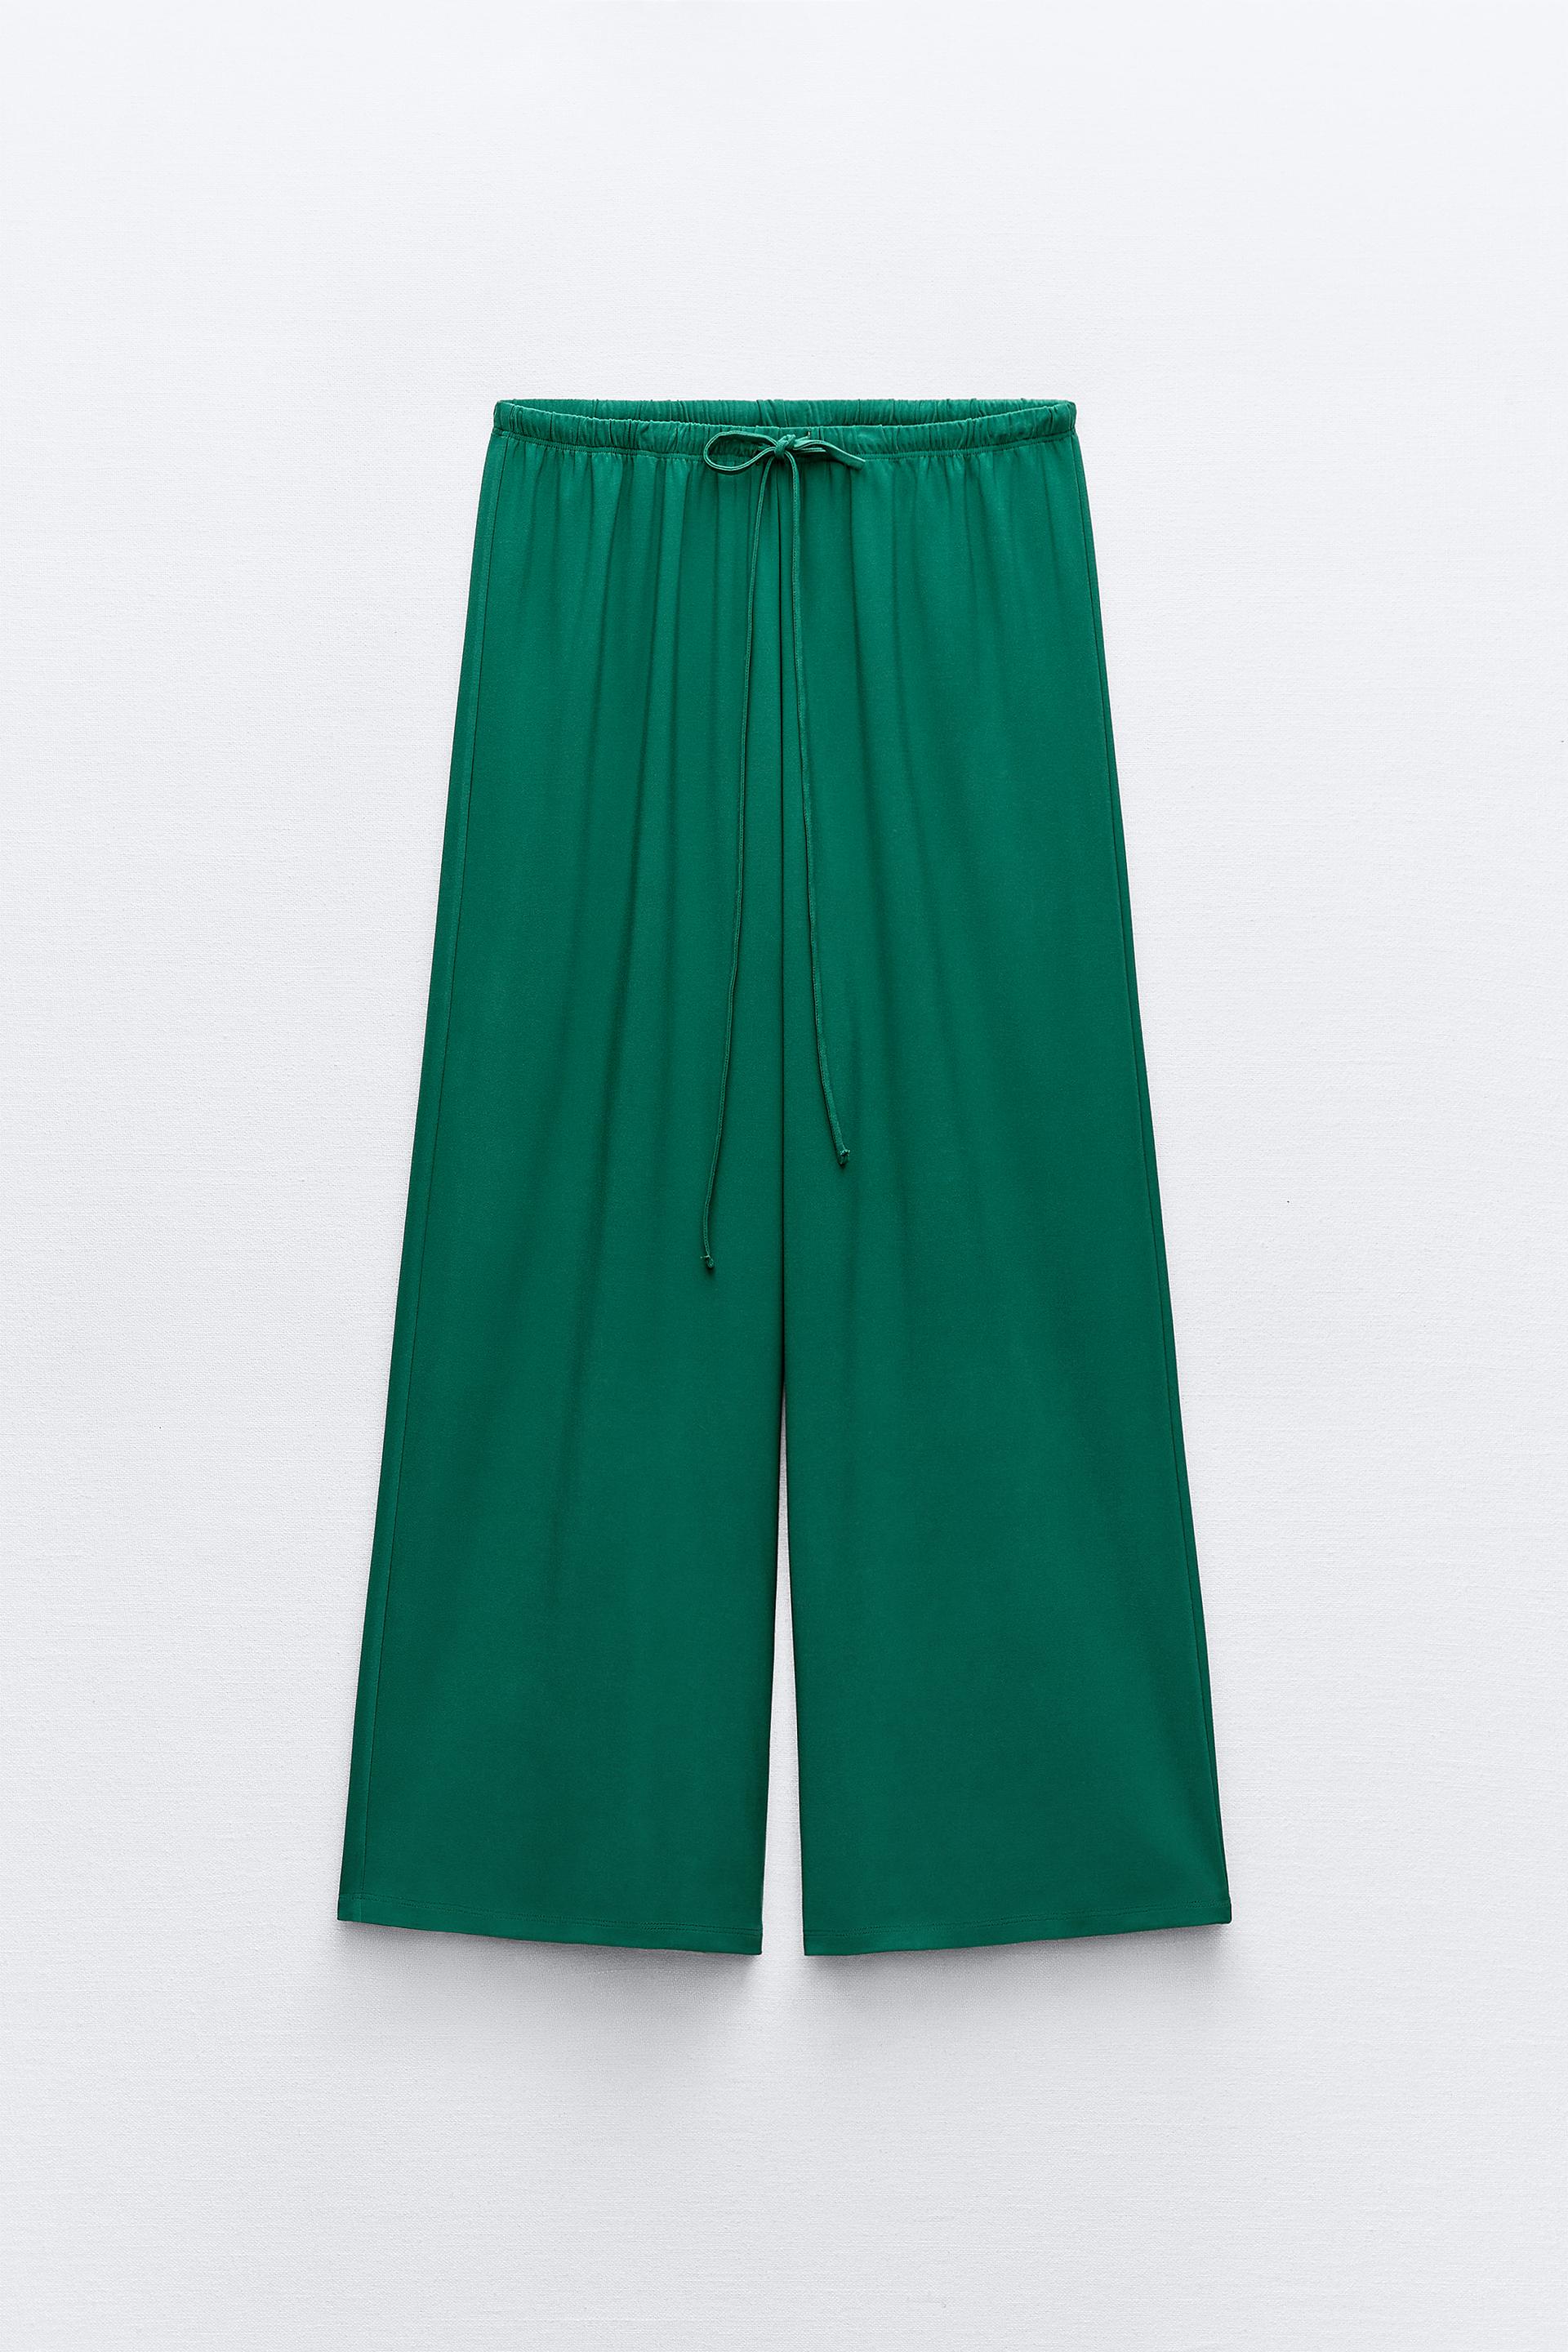 Брюки Zara Flowing, темно-зеленый брюки zara flowing рыжевато коричневый